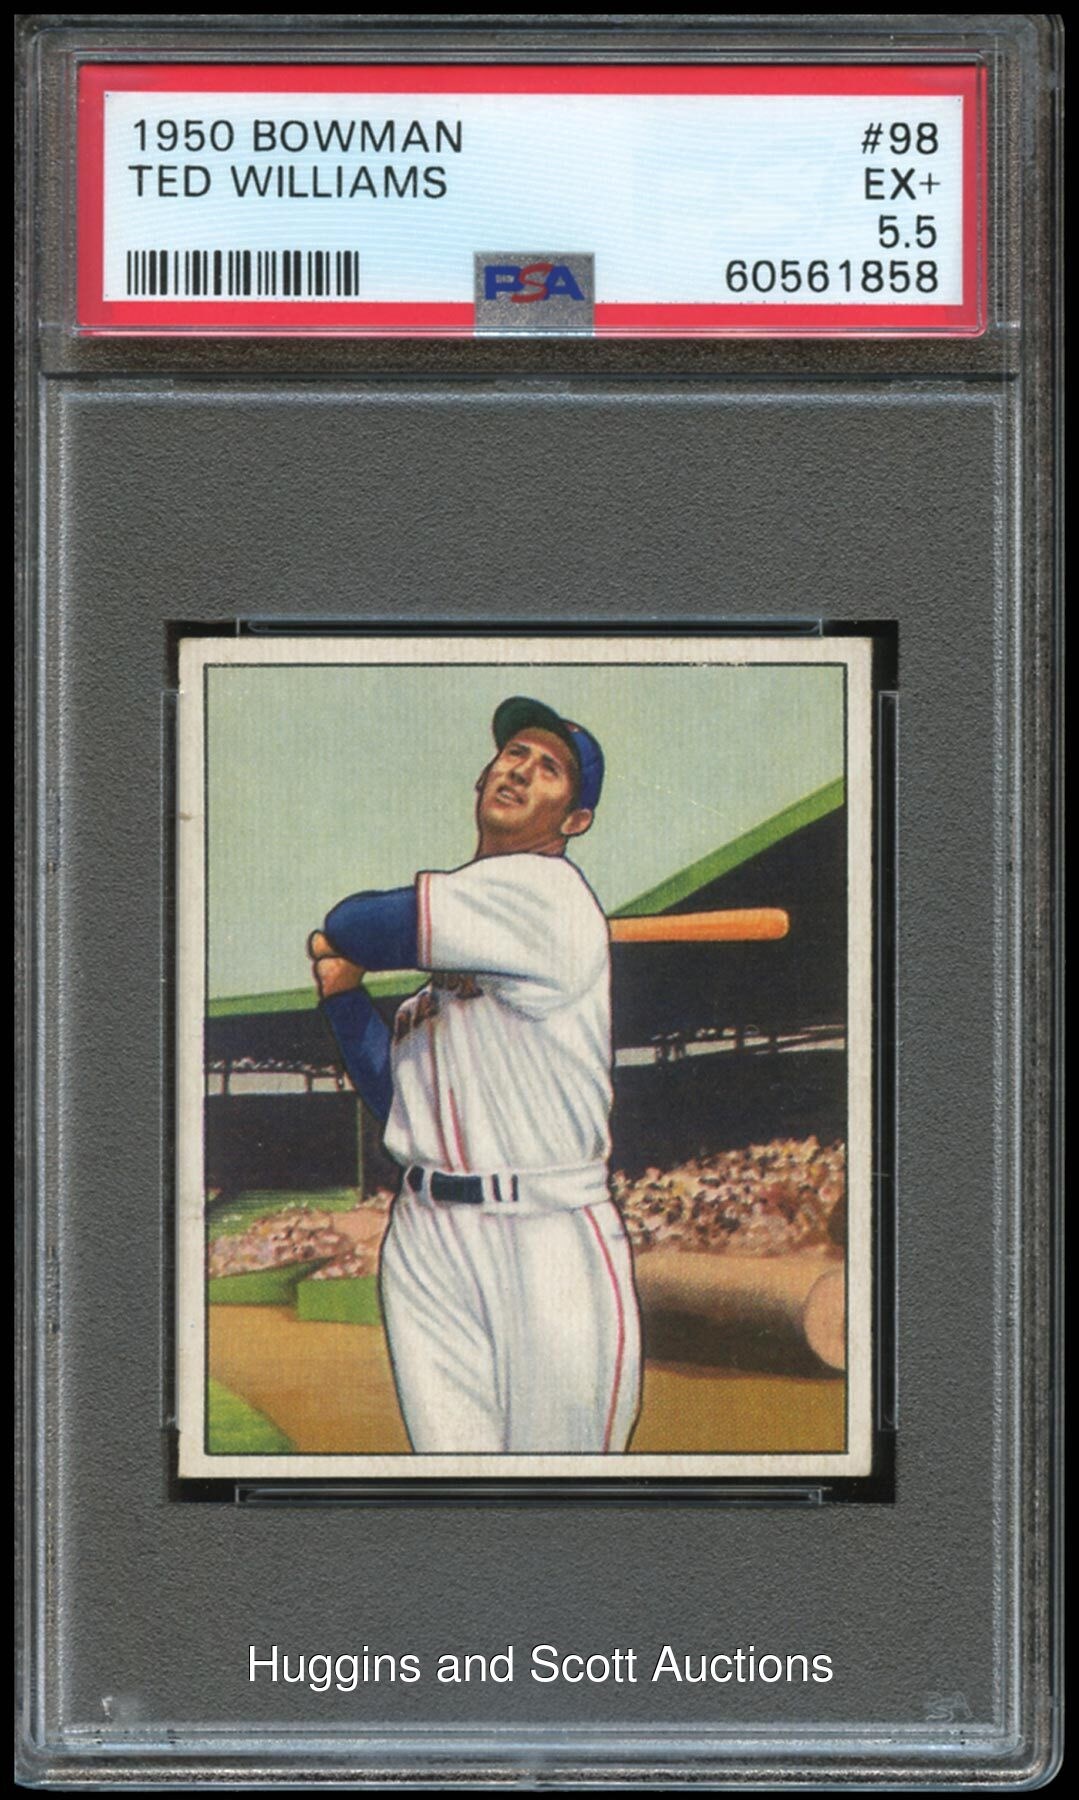 1950 Bowman Baseball #98 Ted Williams - PSA EX+ 5.5 